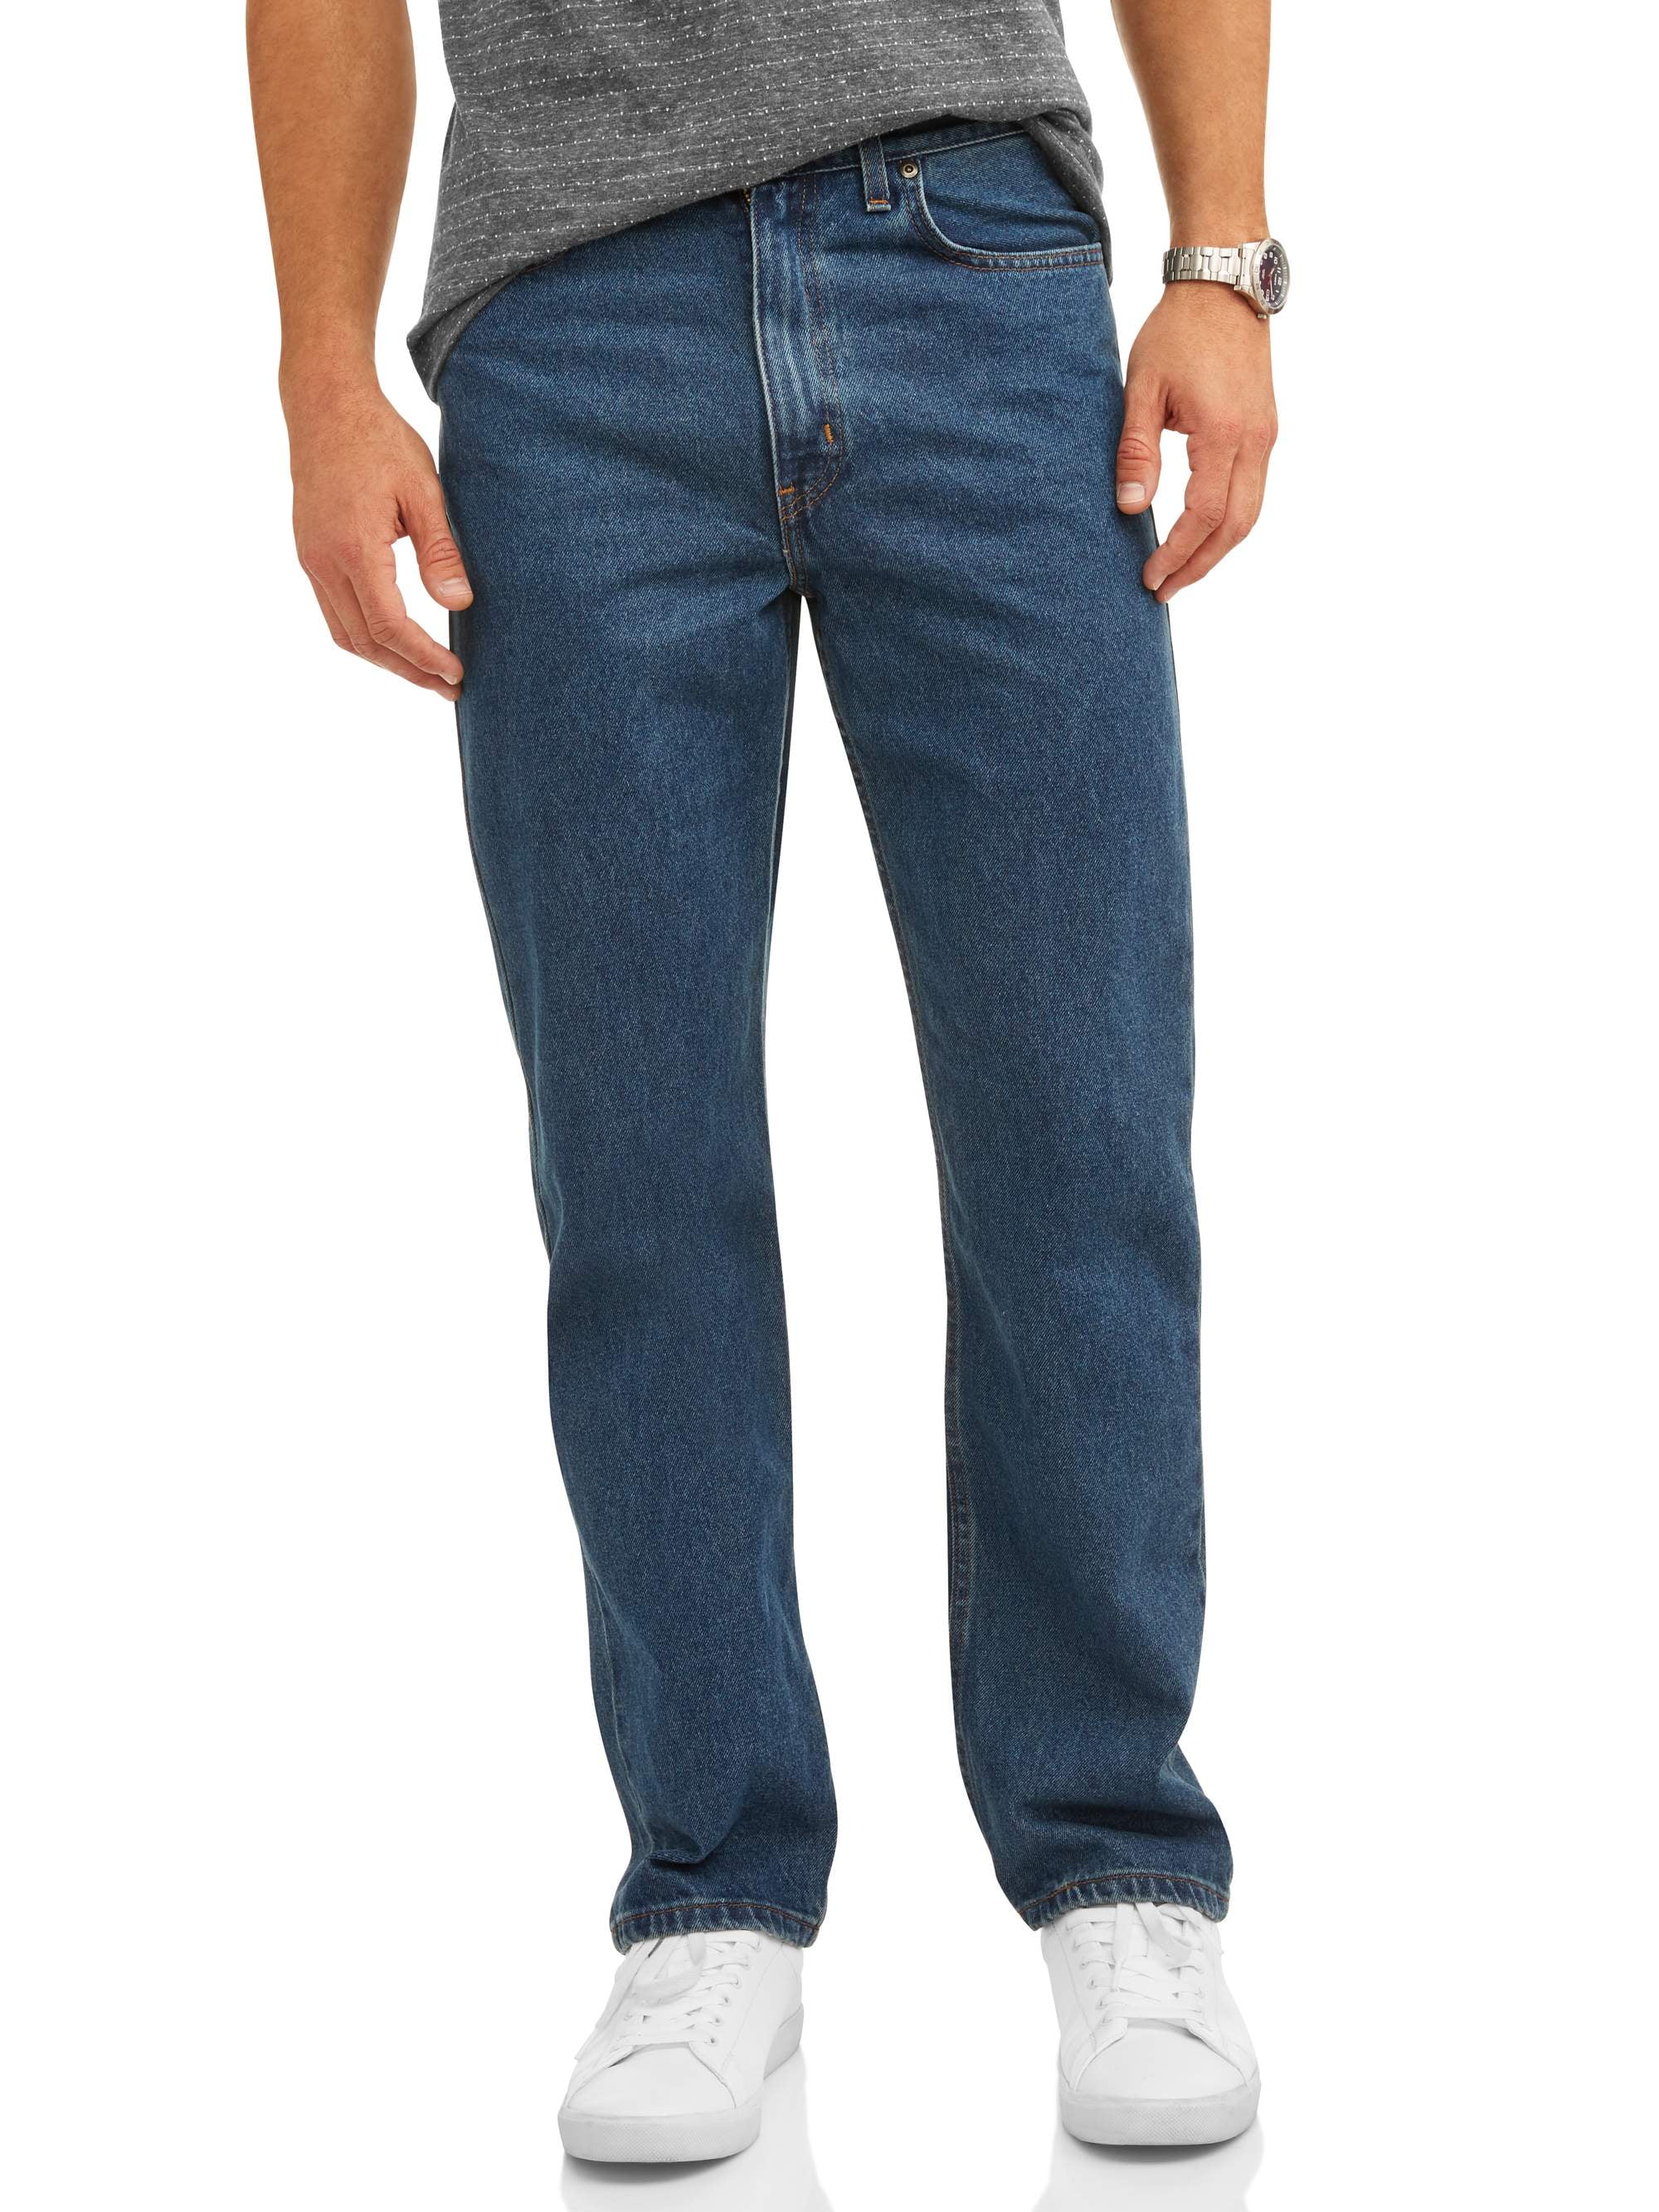 KAM Mens Big Tall Size Regular Fit Stretch Stretchy Stretchable Darkwash Jeans